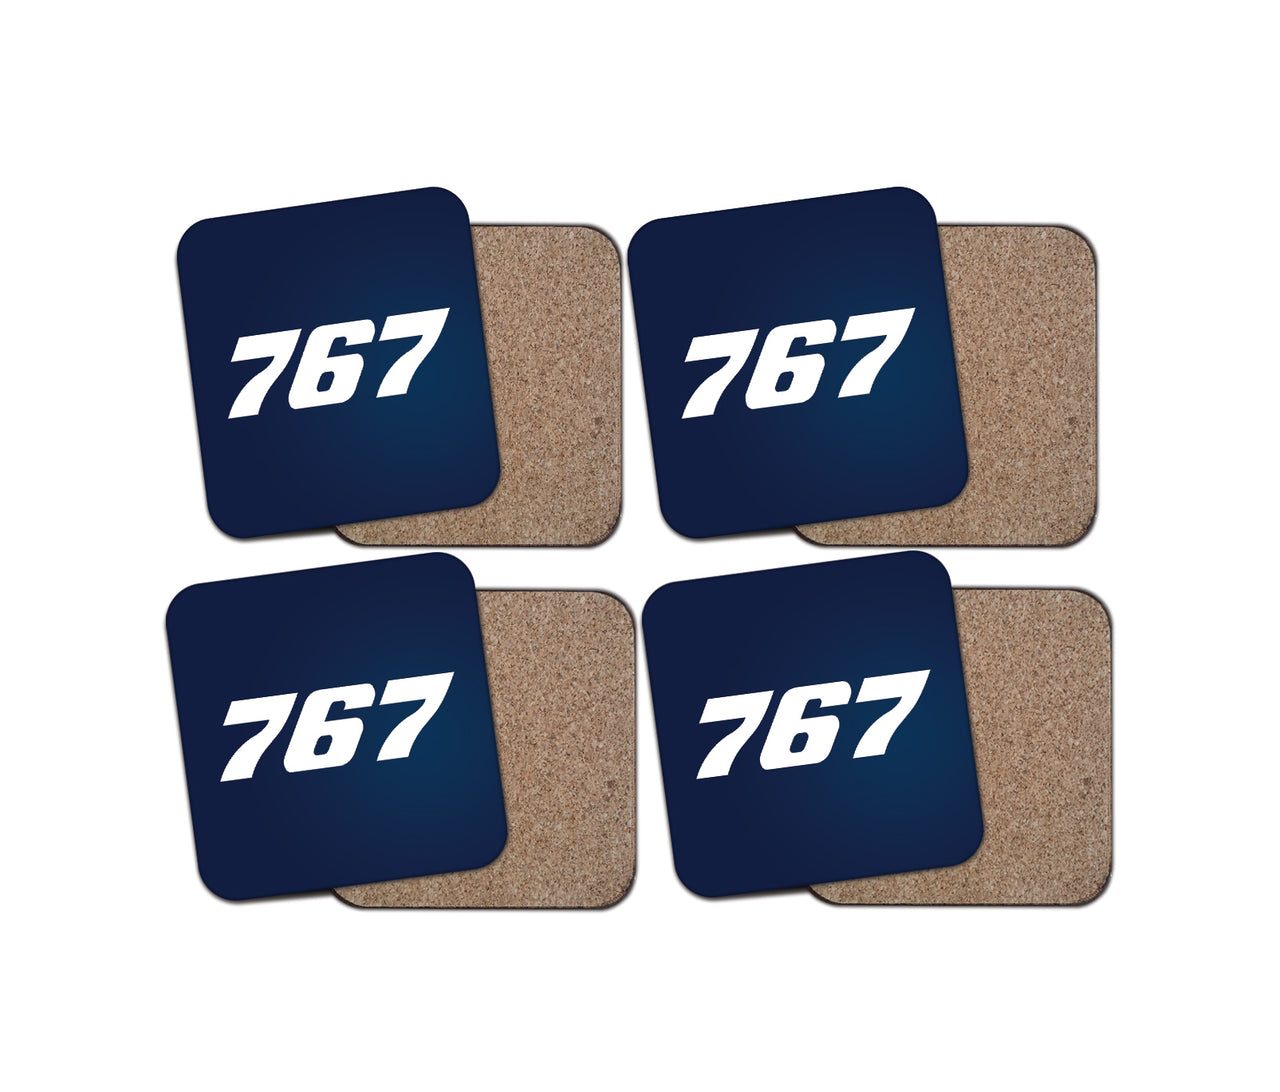 767 Flat Text Designed Coasters